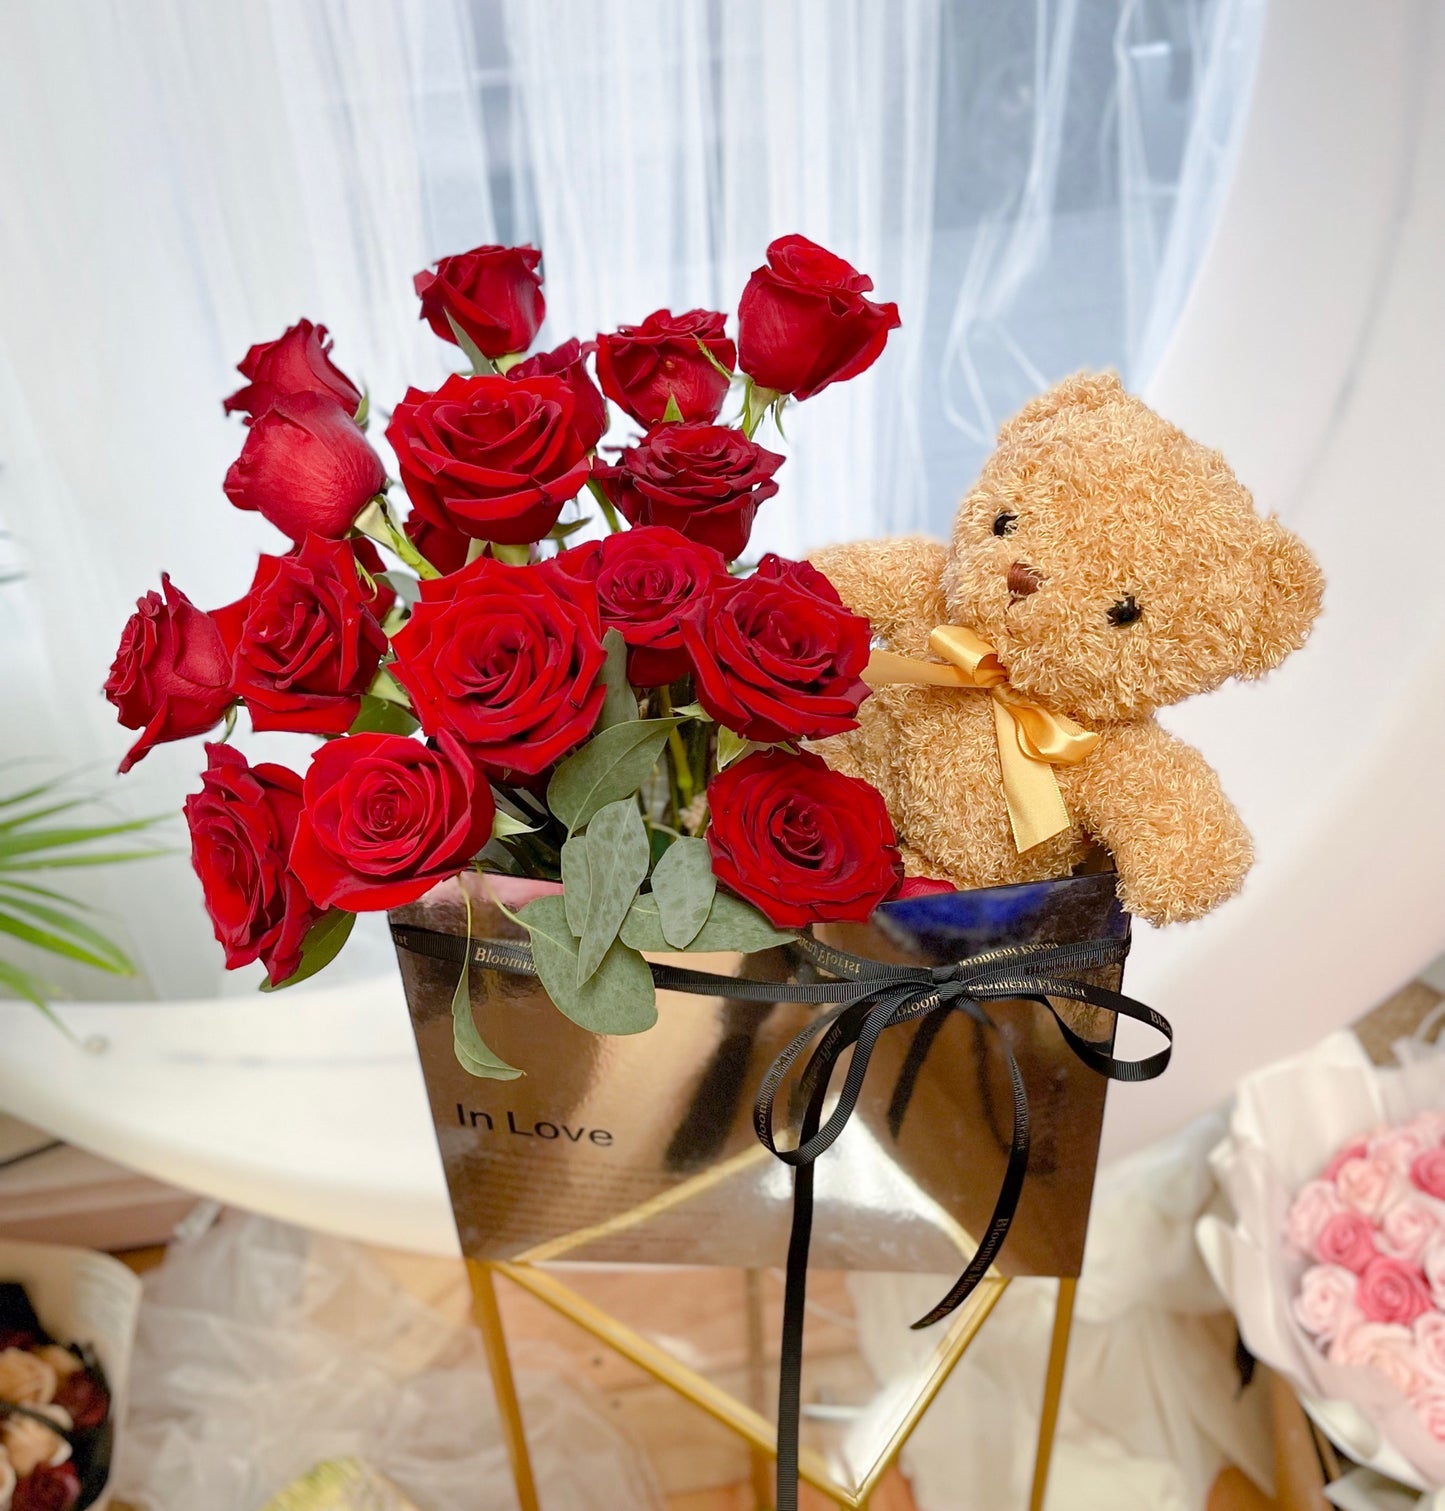 【FLOWER FLOWER】24朵红玫瑰配泰迪熊